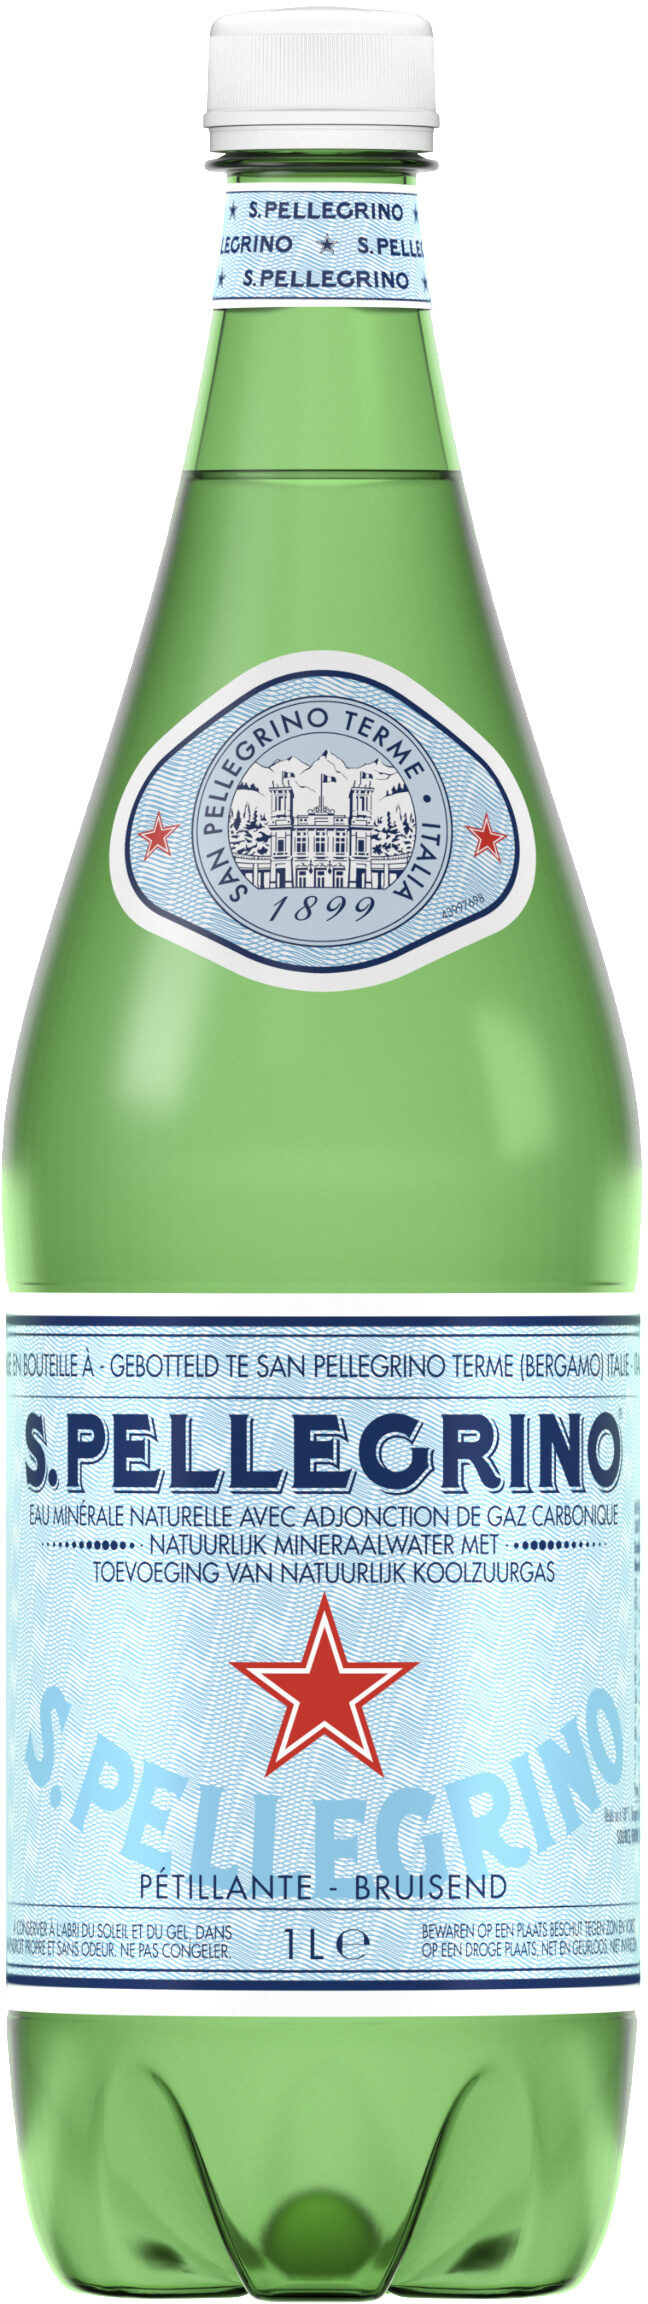 S. Pellegrino Water - Product